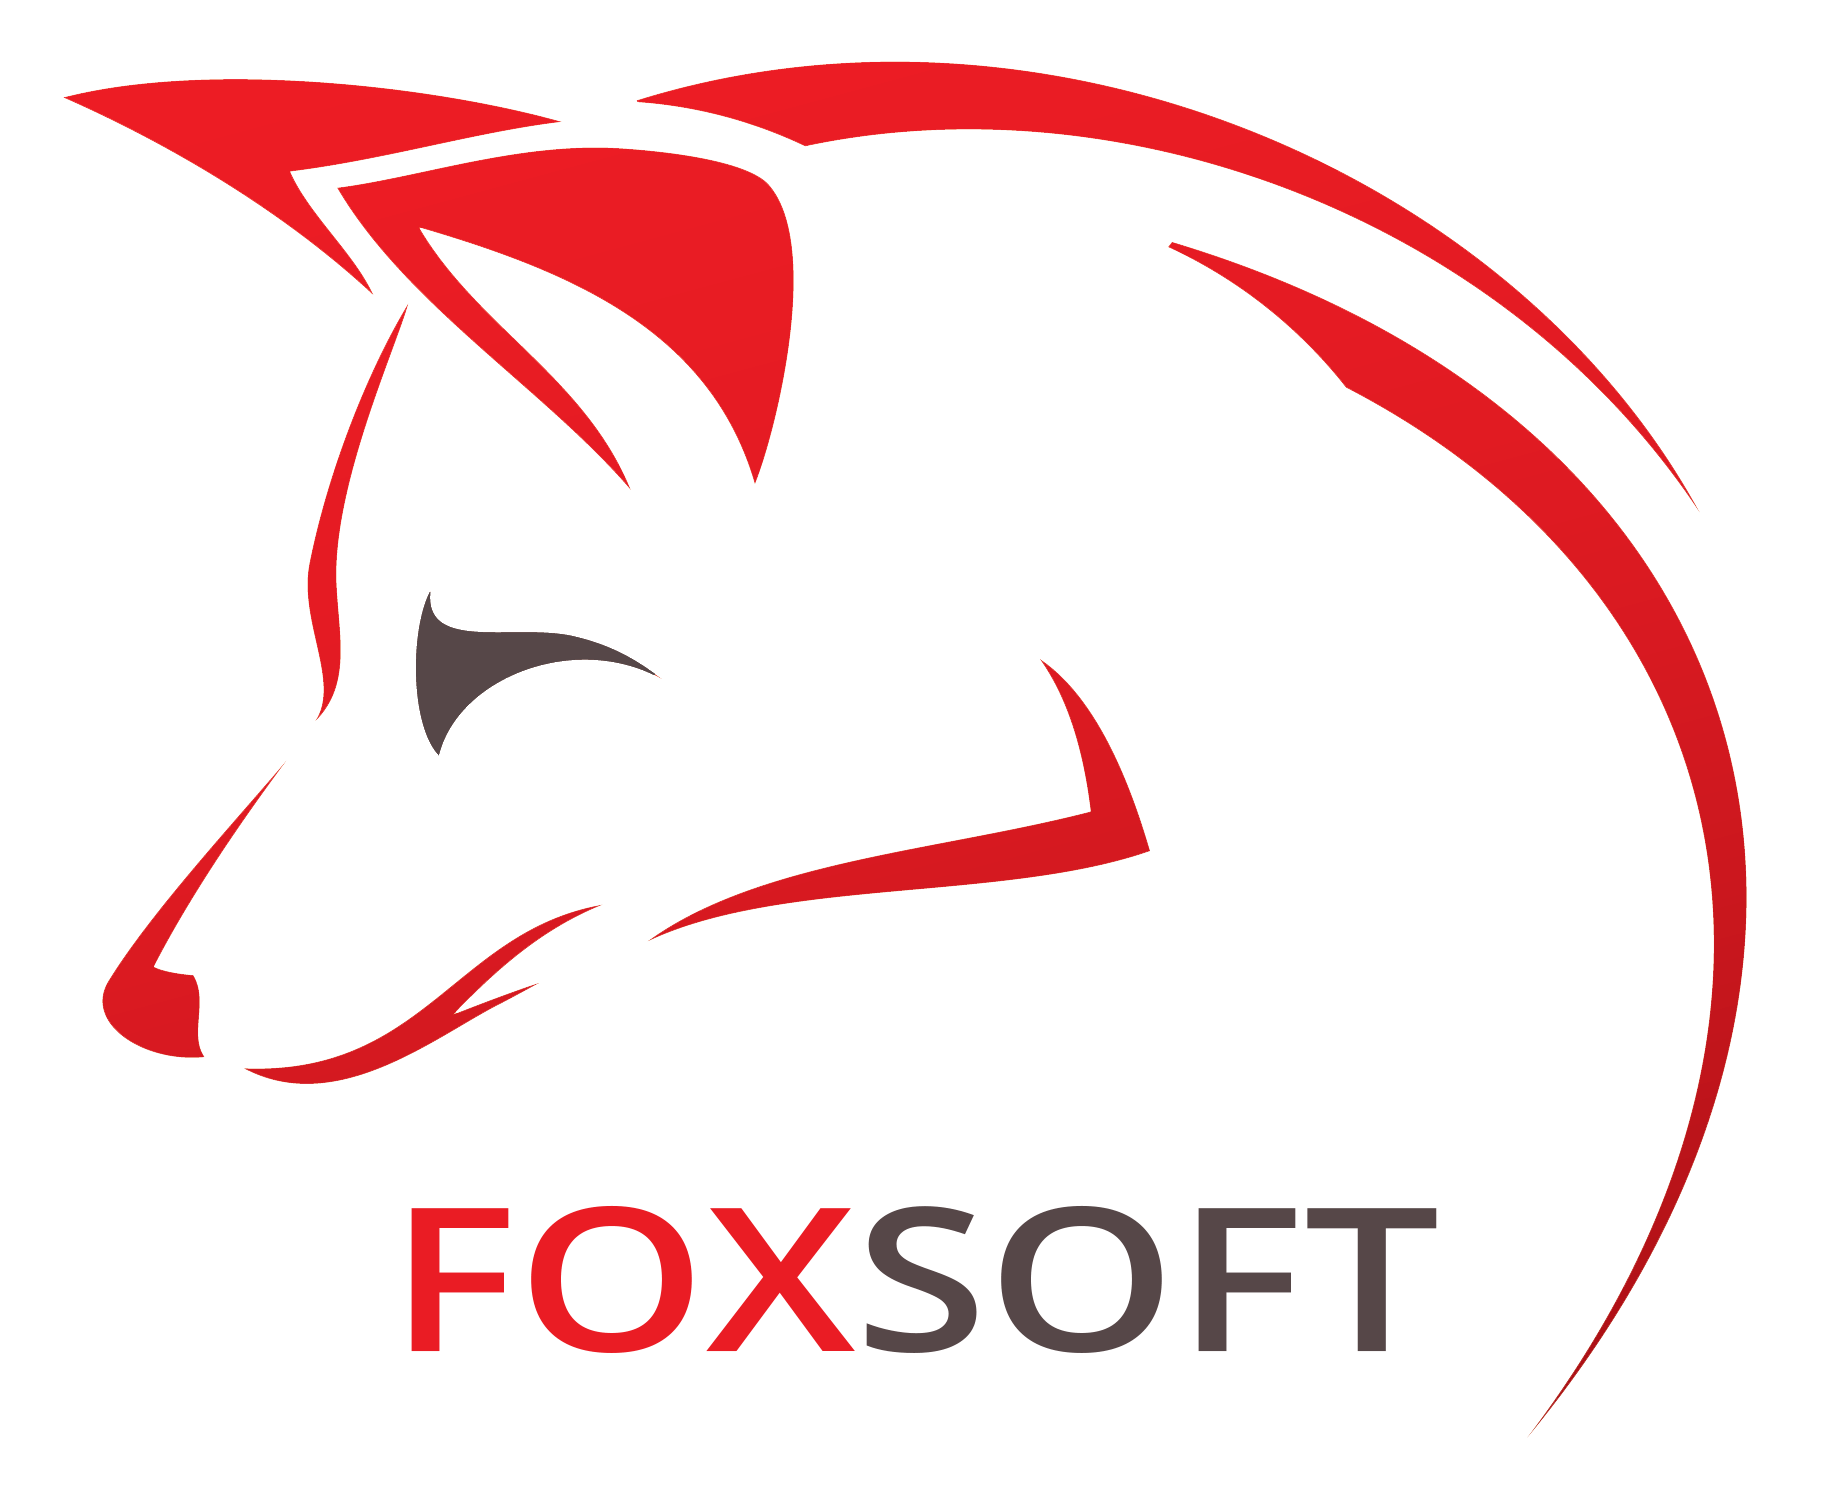 Foxsoft logo